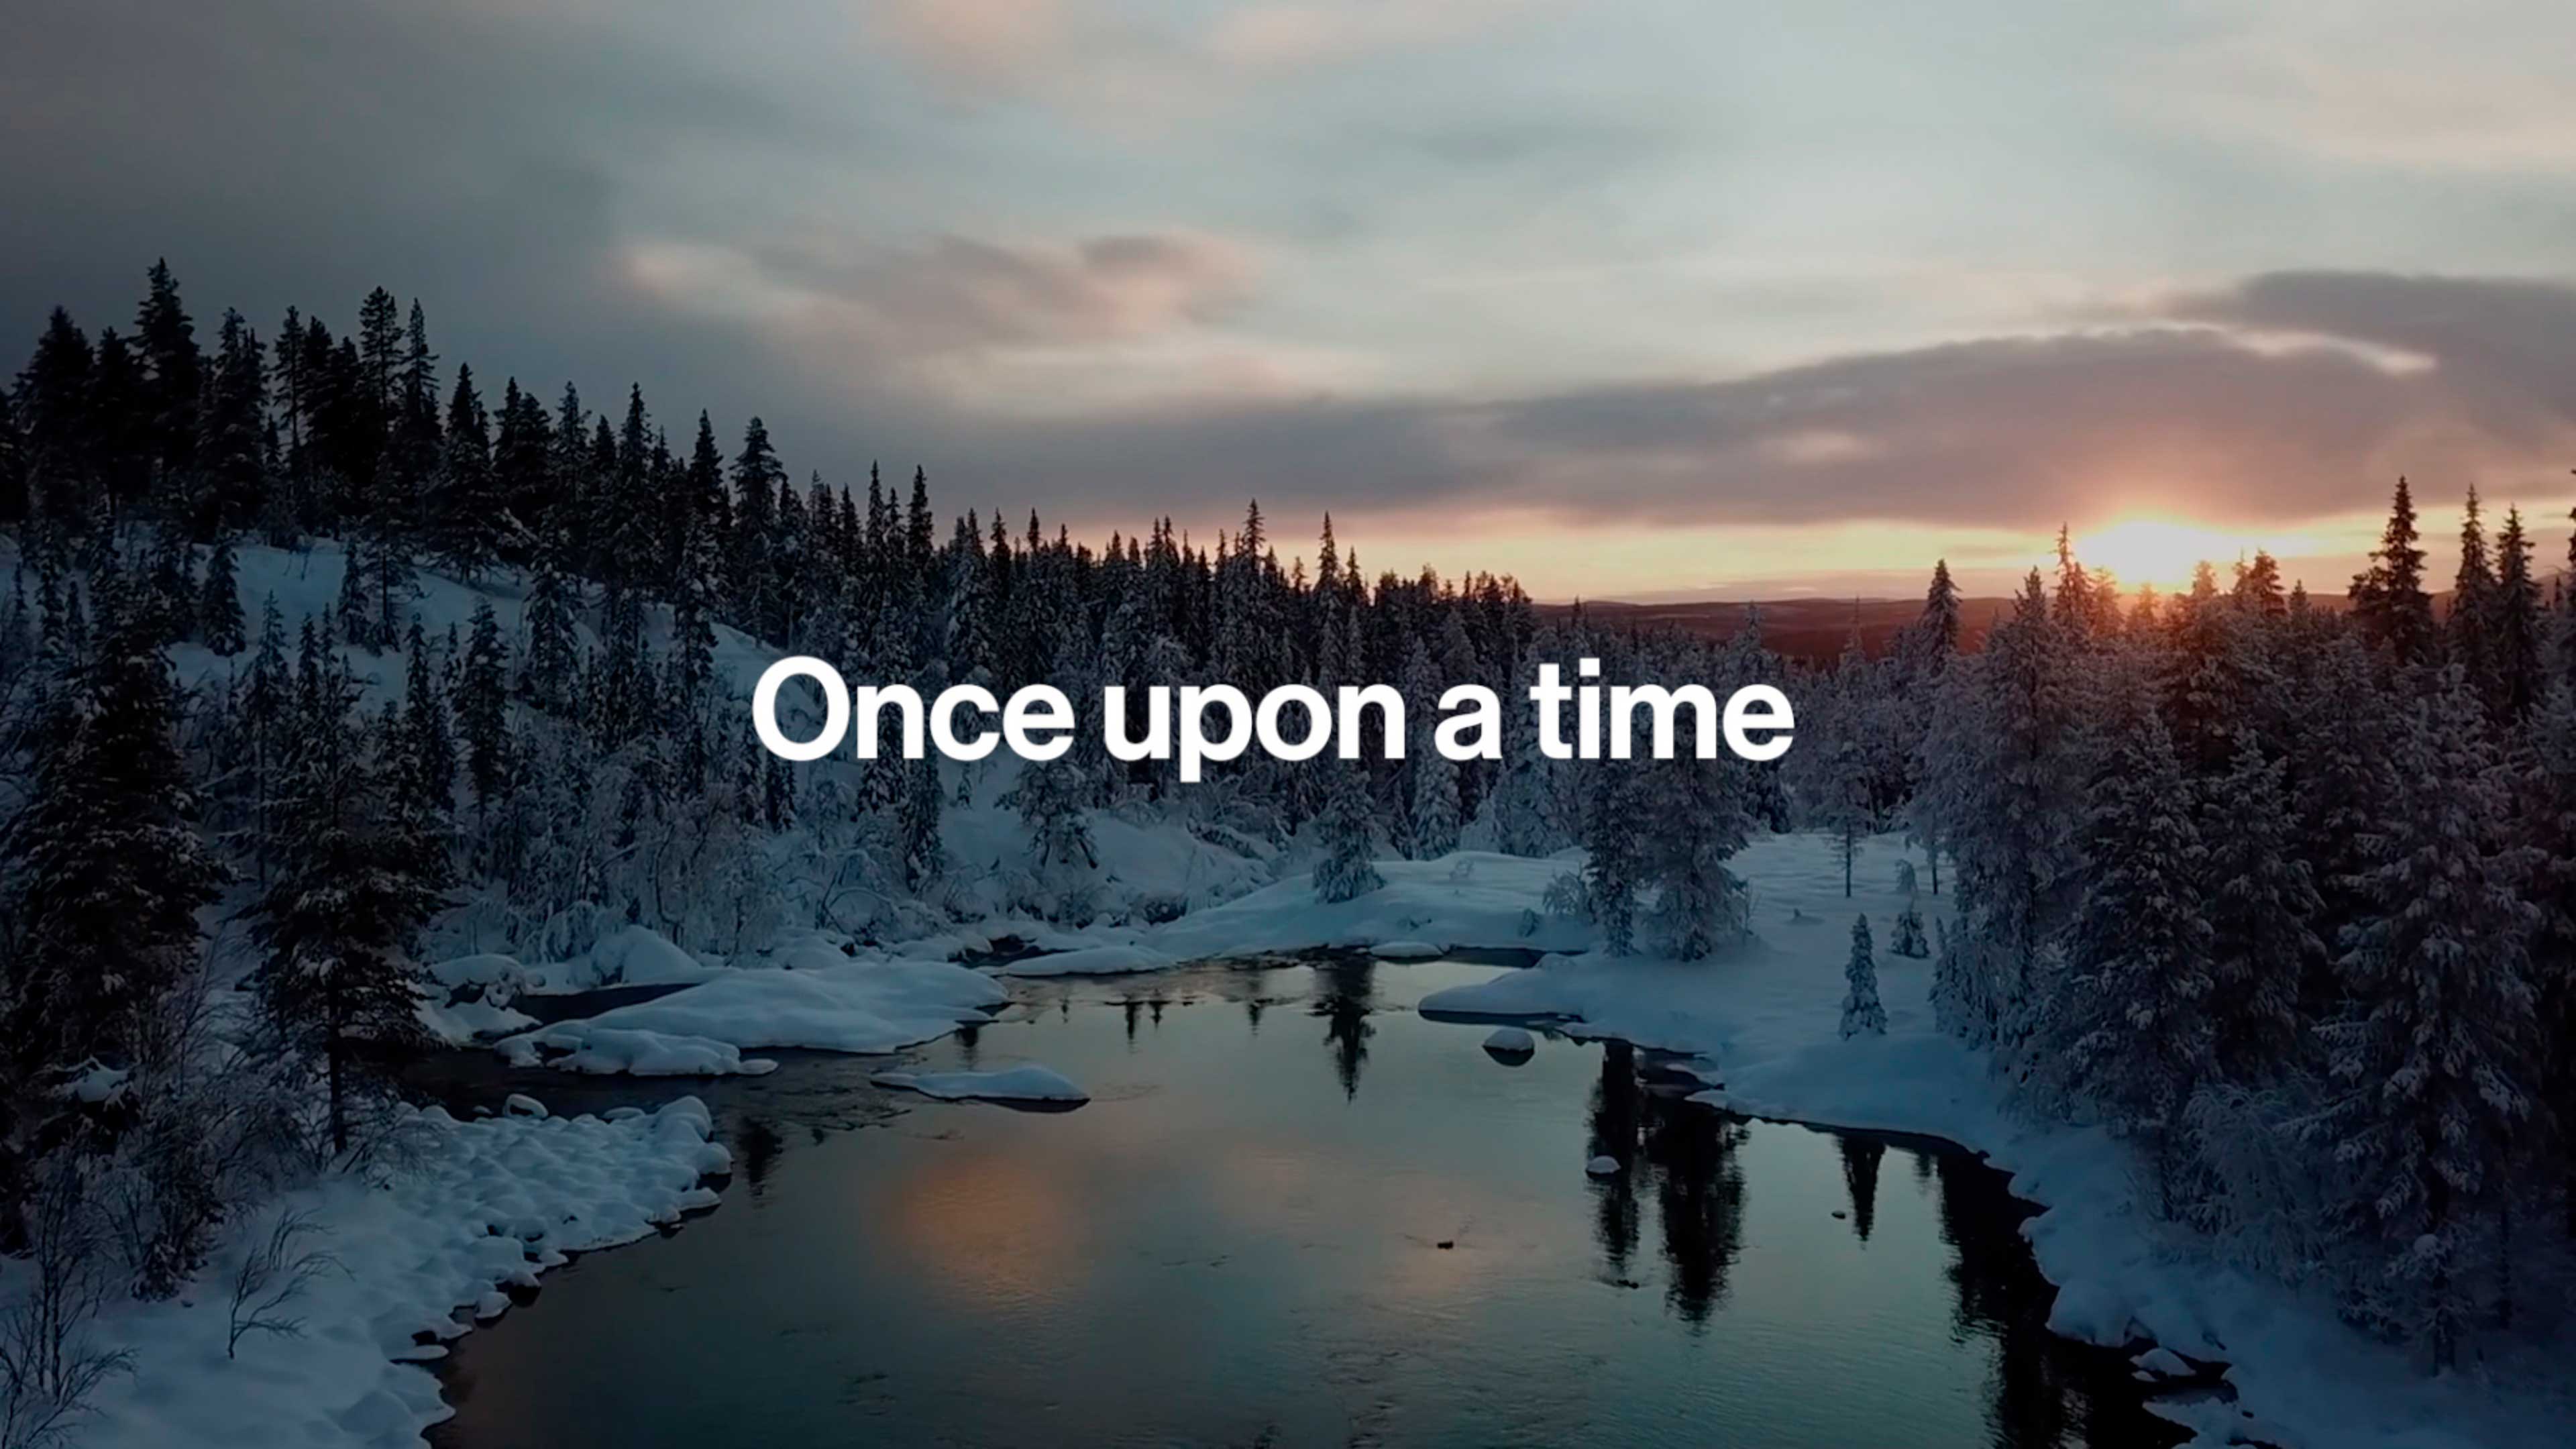 Bild einer Schneelandschaft bei Sonnenuntergang, Text „Once upon a time“.